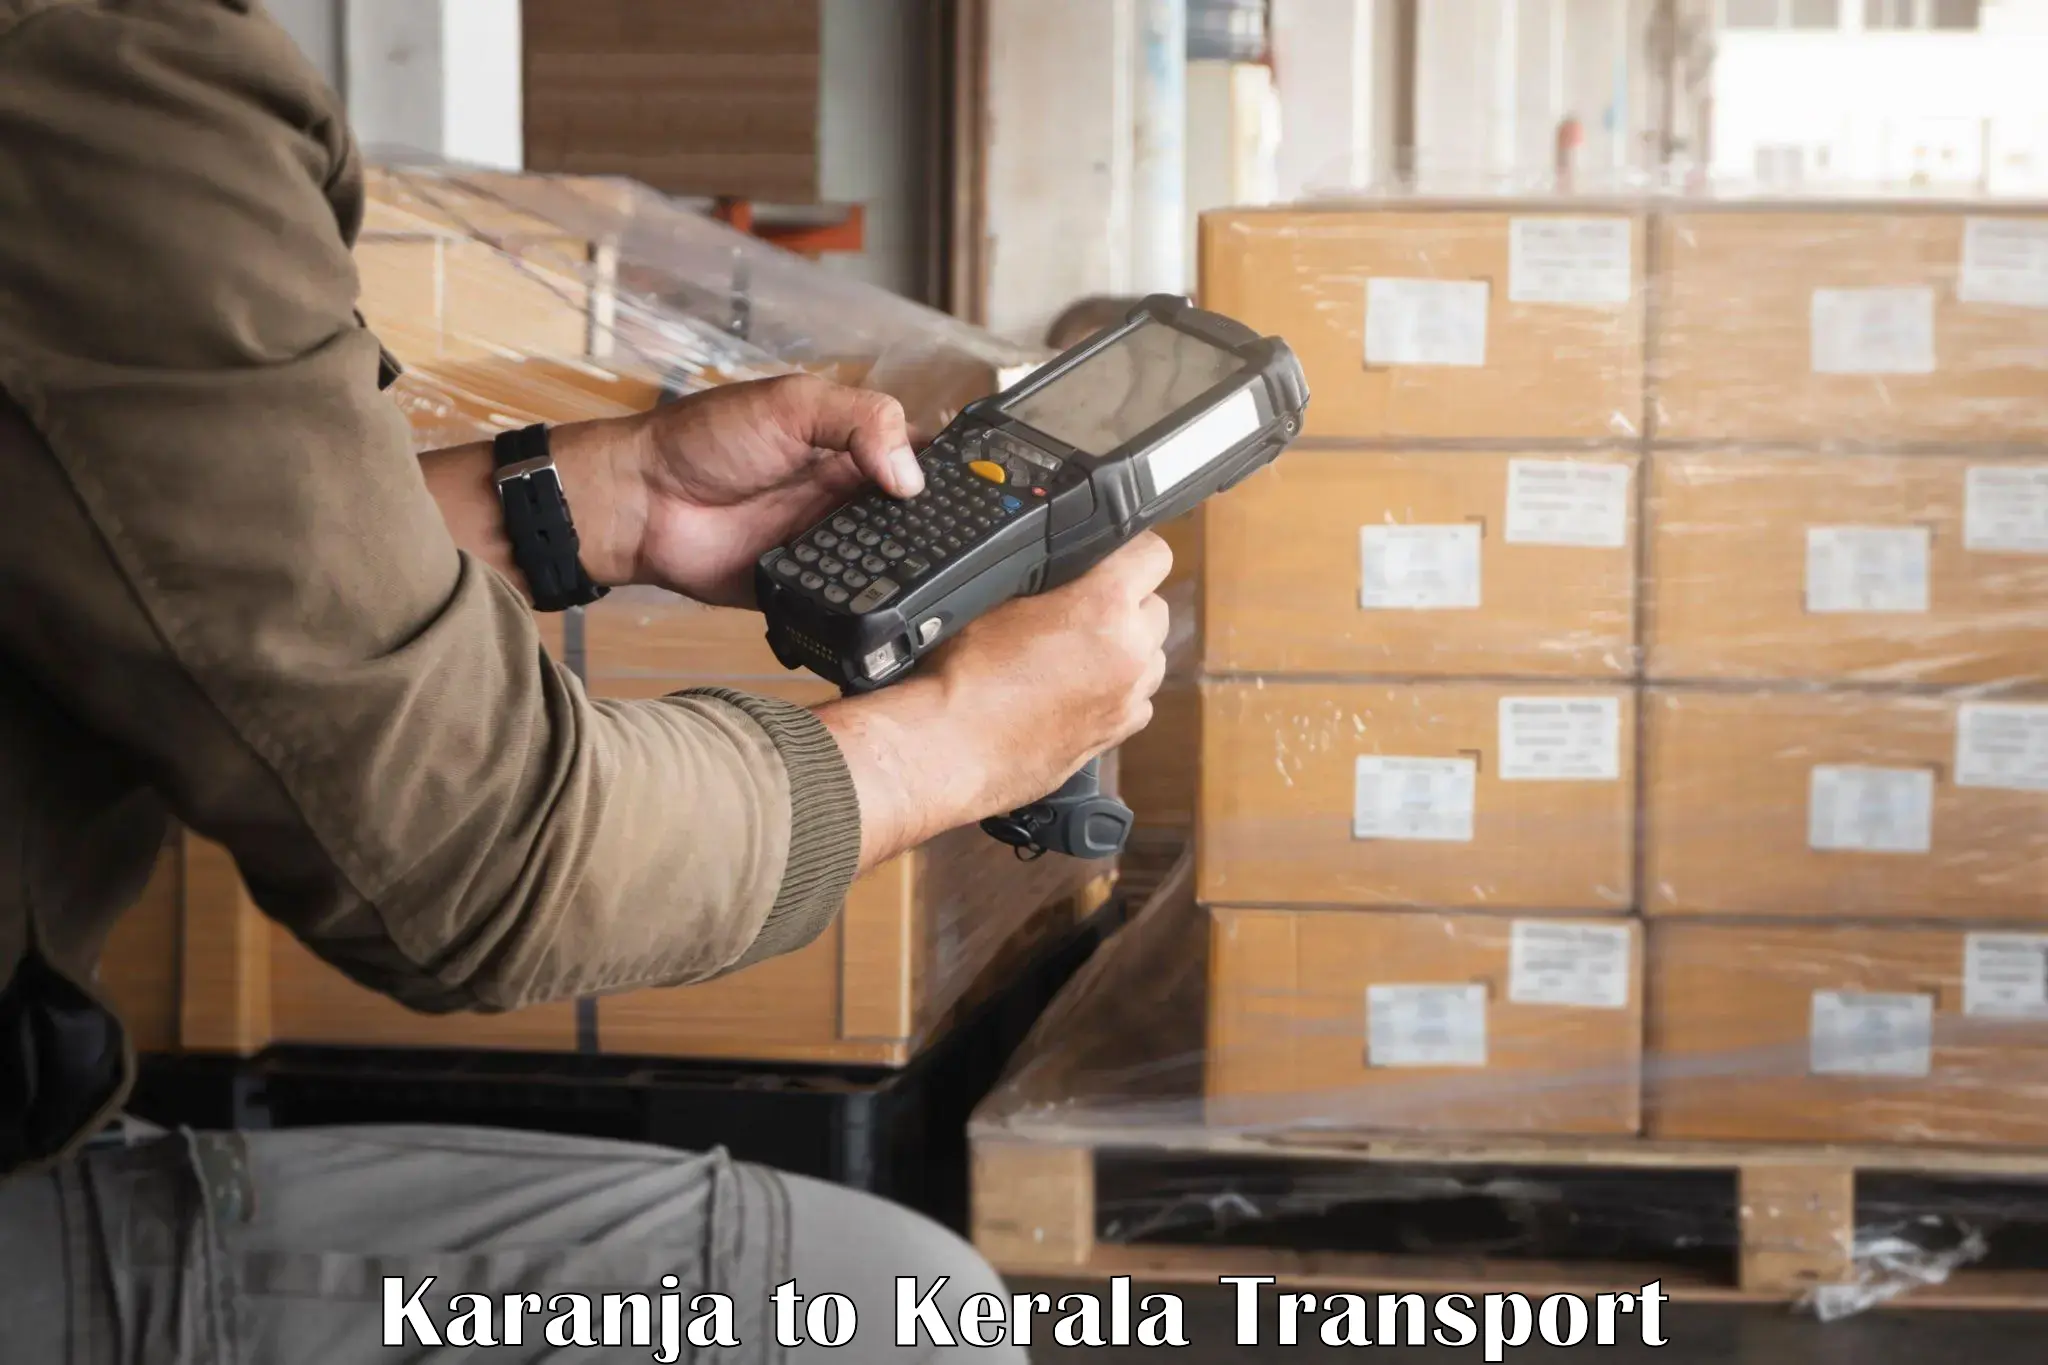 Sending bike to another city Karanja to Kerala